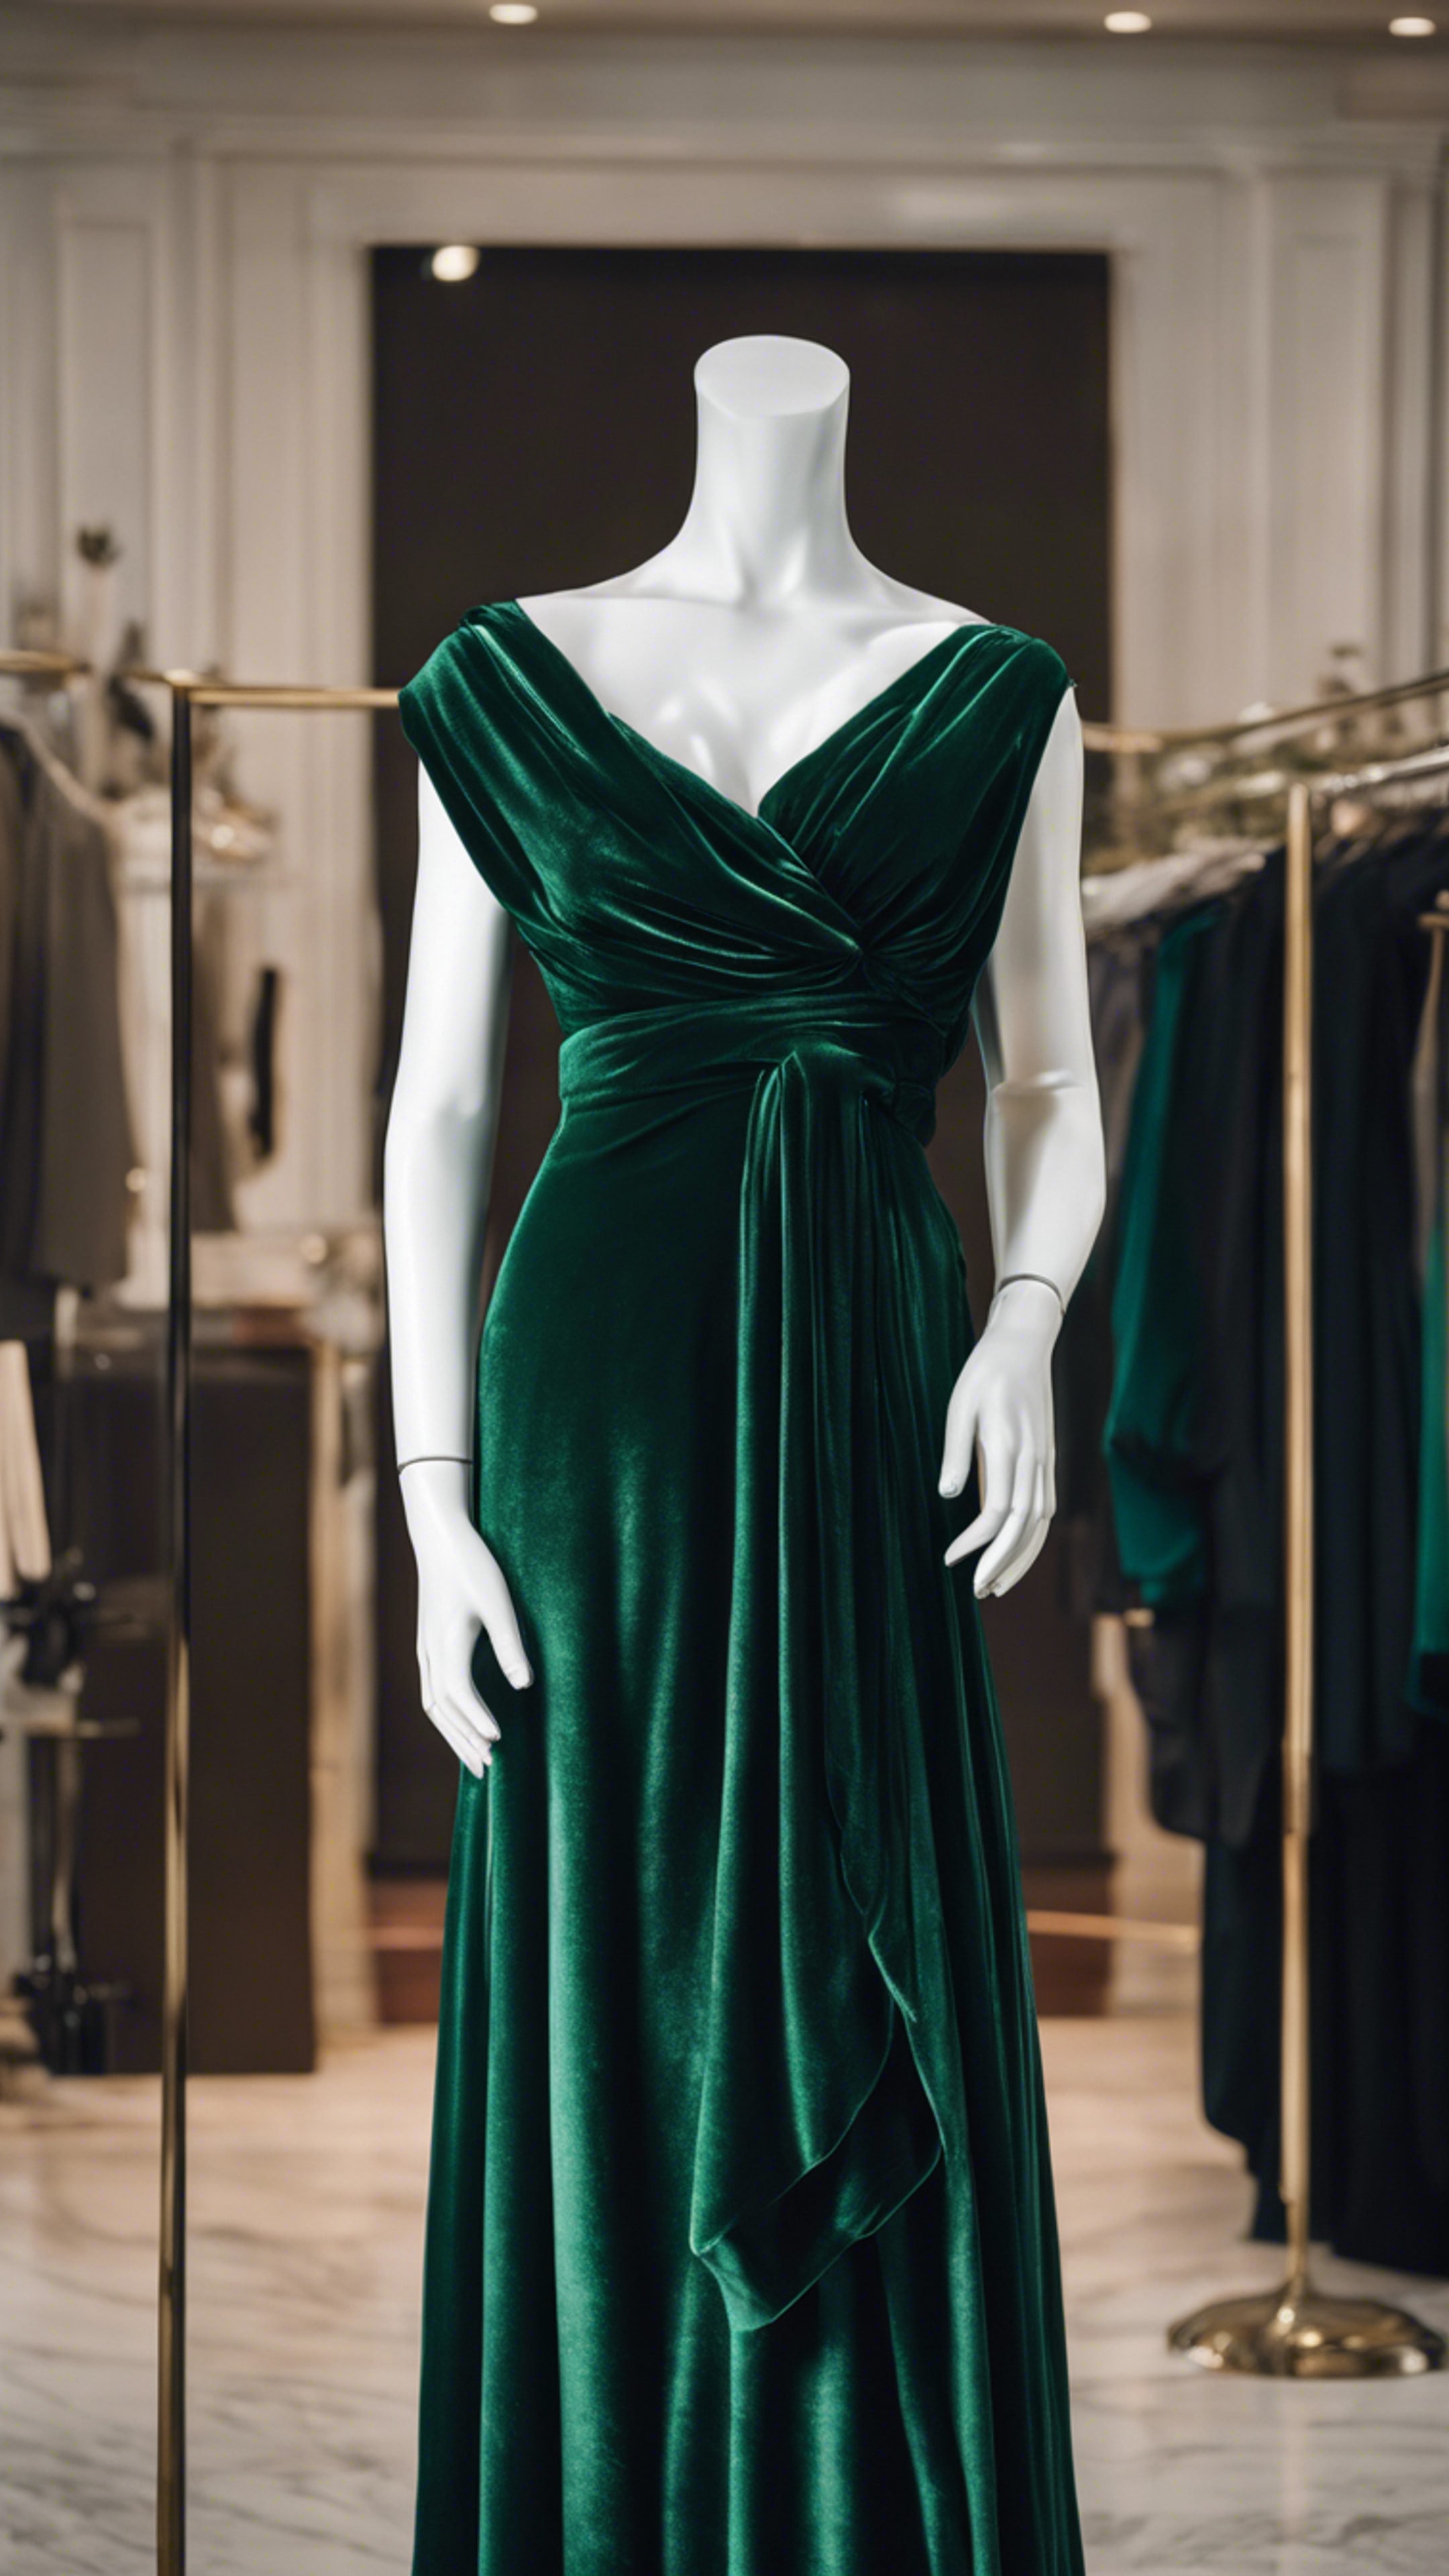 A classy dark green velvet dress draped on a mannequin. Ფონი[4958bfaa75d040bb9909]